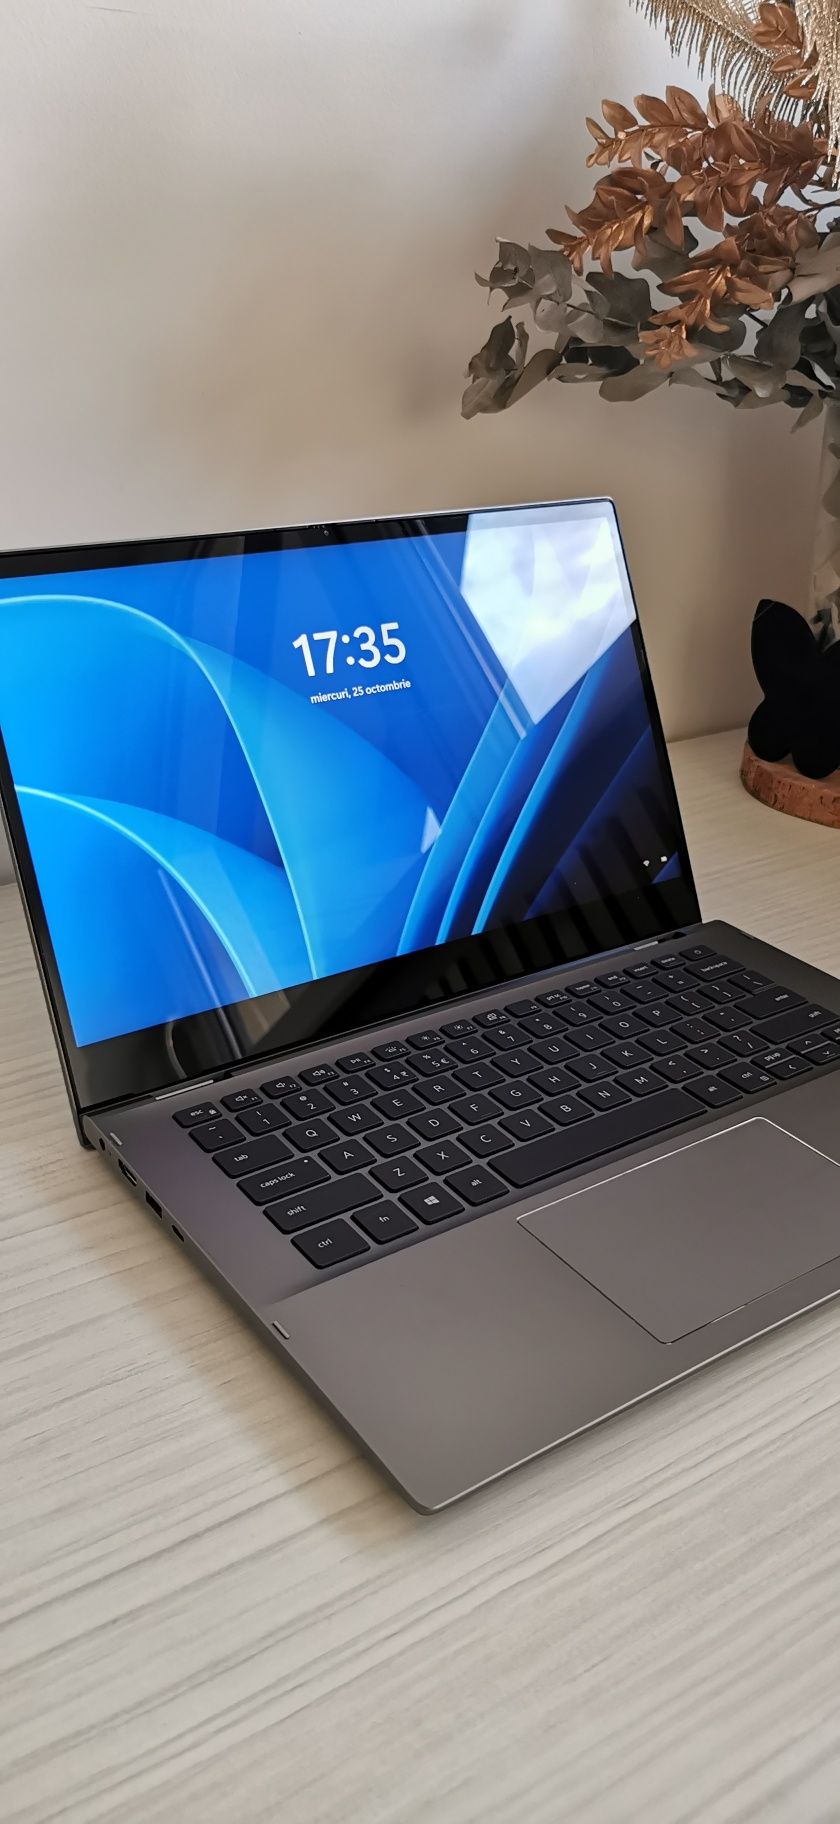 Vând Laptop 2 in 1 Dell Inspiron 5406 încă în garanție